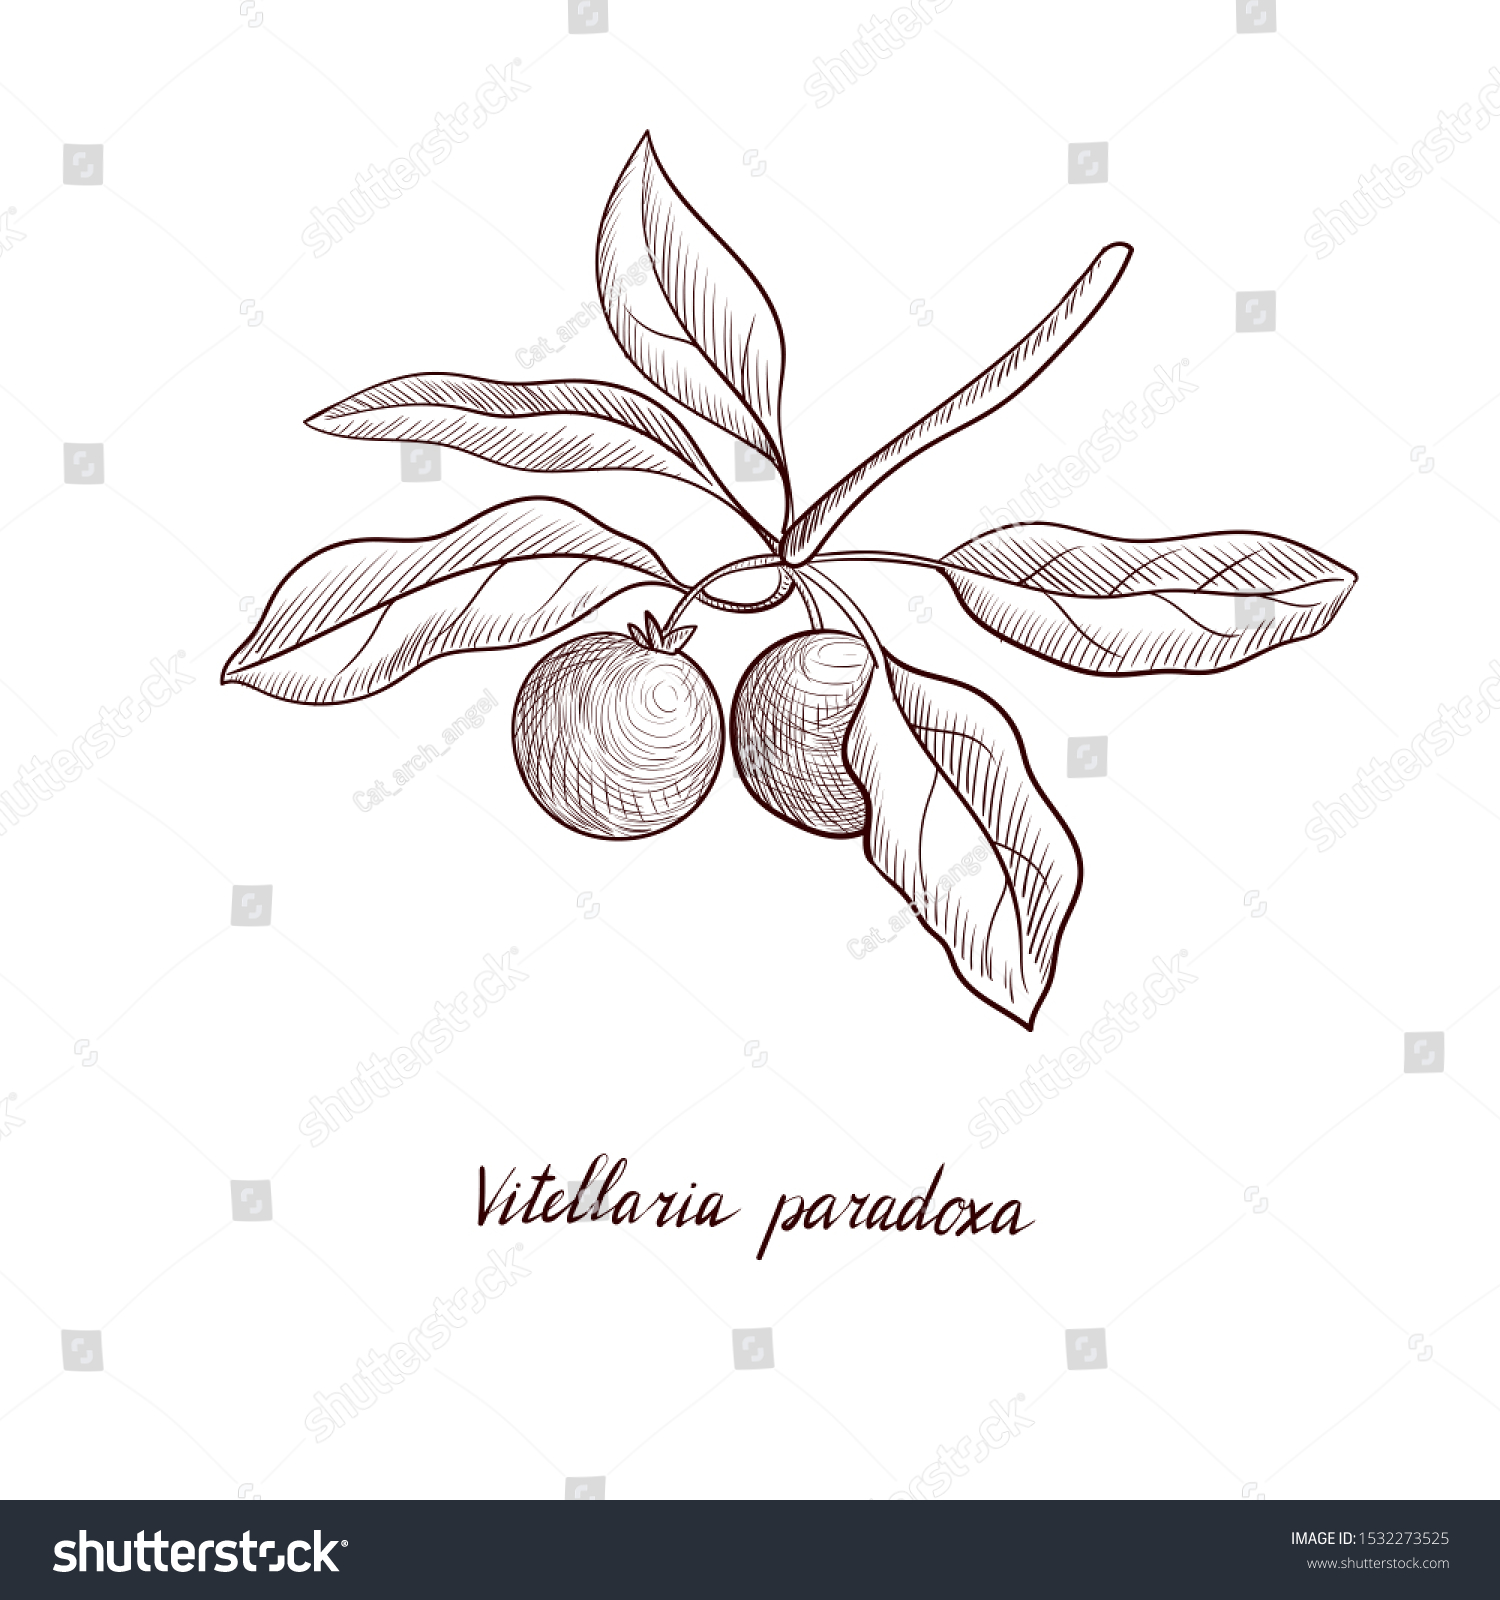 SVG of vector drawing shea tree fruits , Vitellaria paradoxa, hand drawn illustration svg